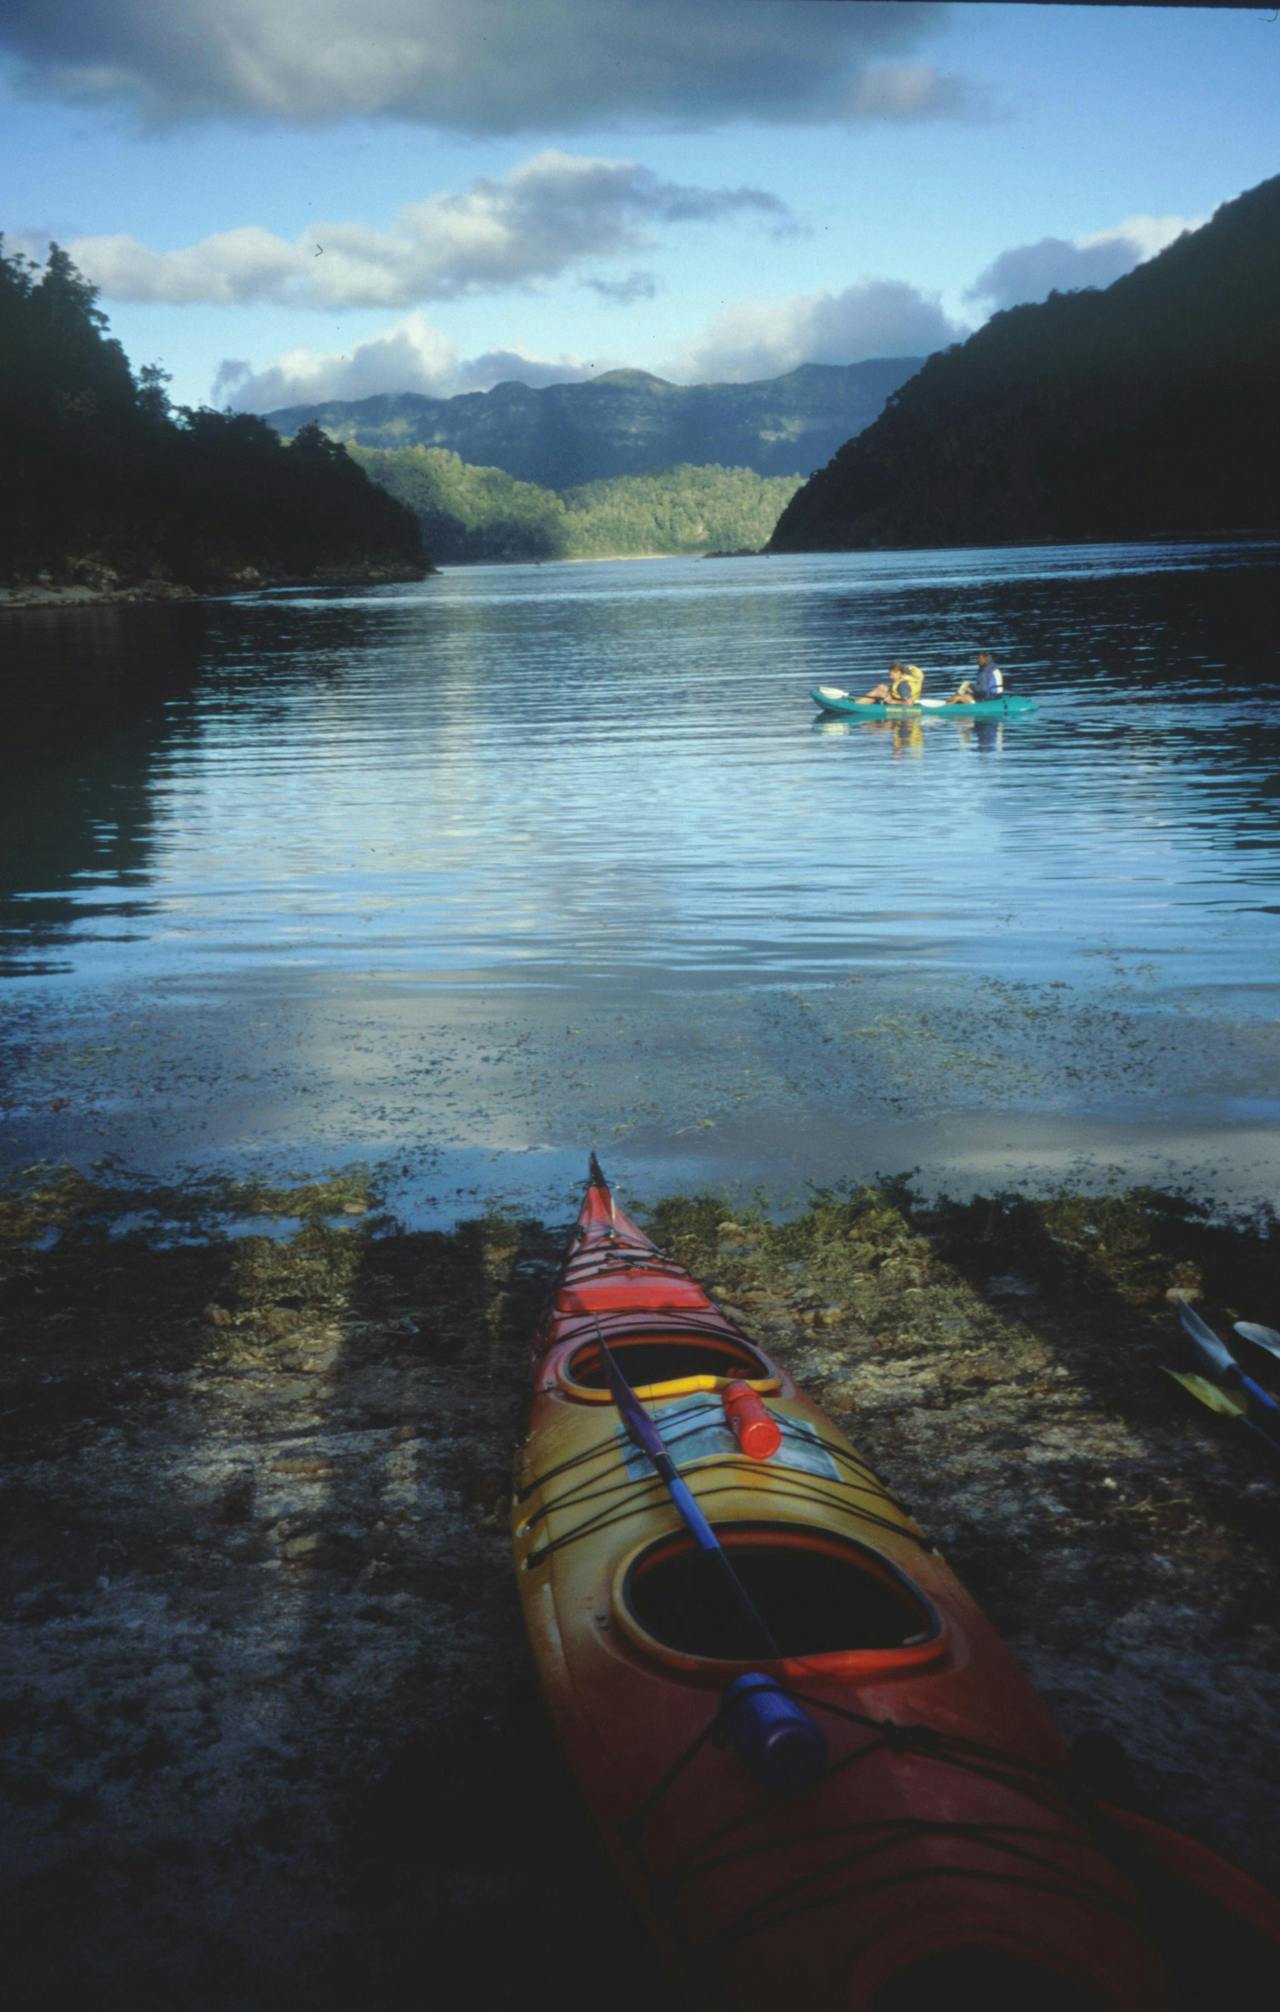 With a multitude of campsites, kayaking Lake Waikaremoana is an alternative way to see the park. Photo: Richard Davies